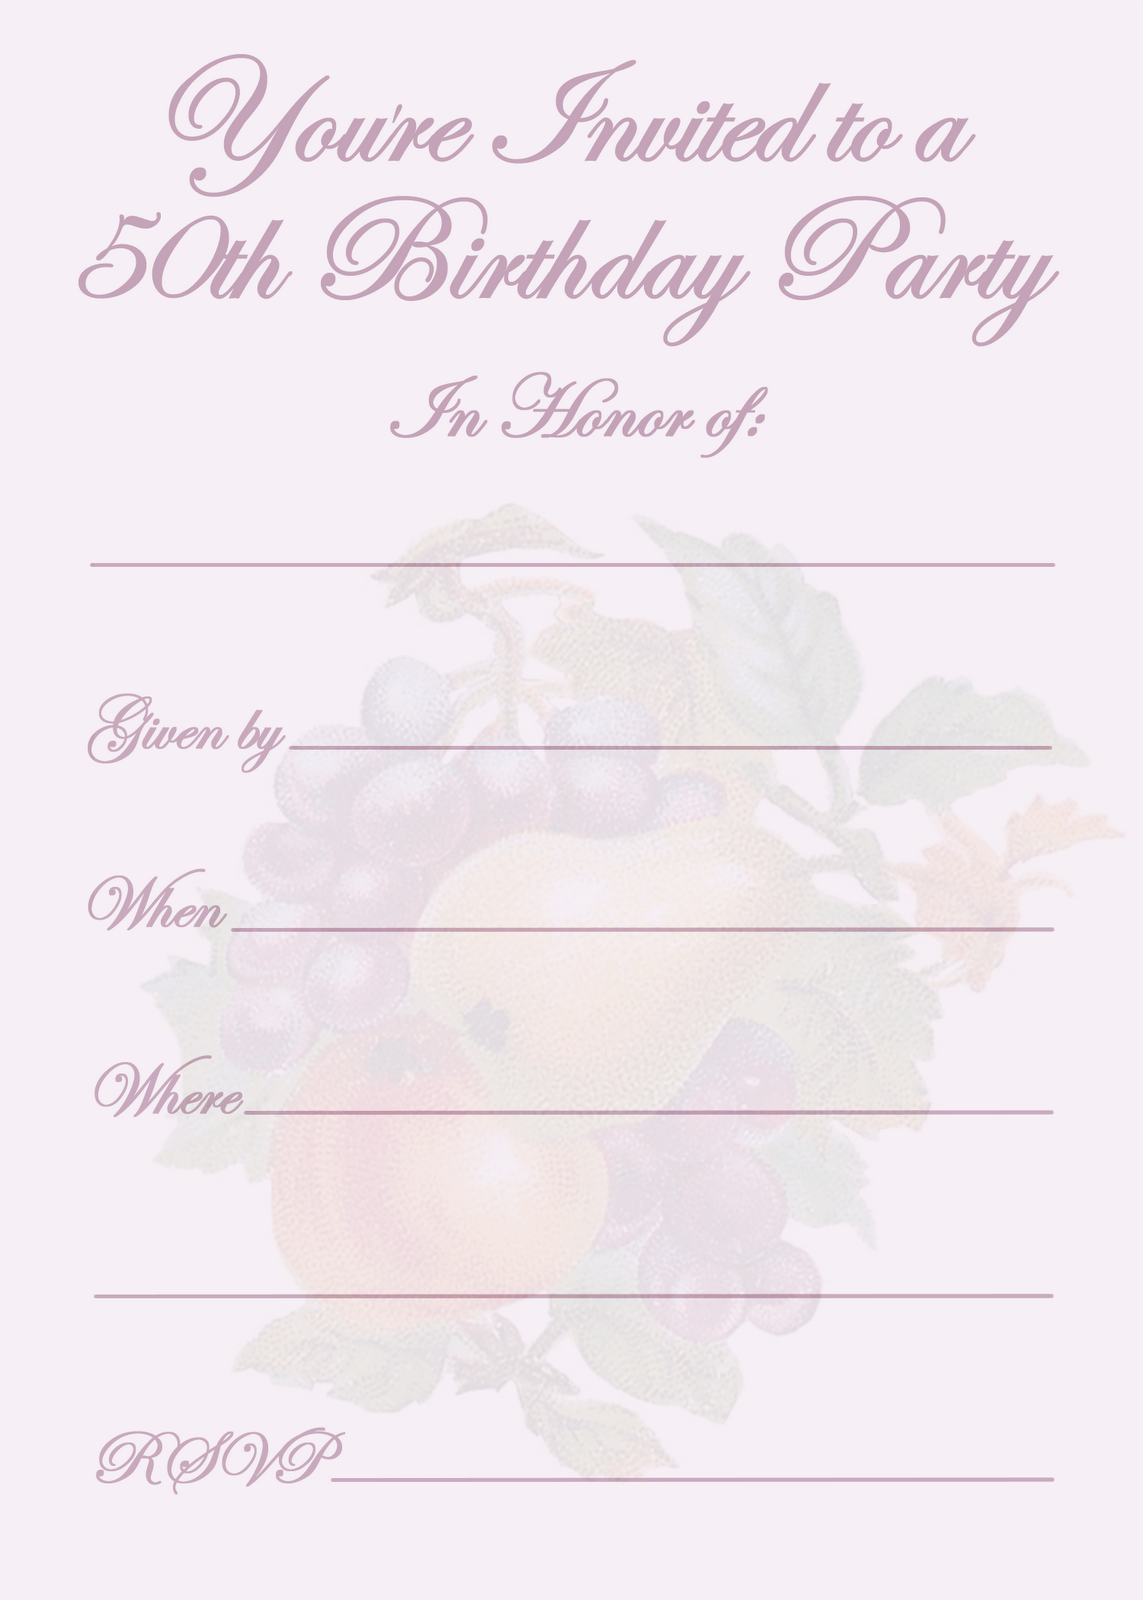 Design Free Birthday Party Invitations Free Butterfly Birthday